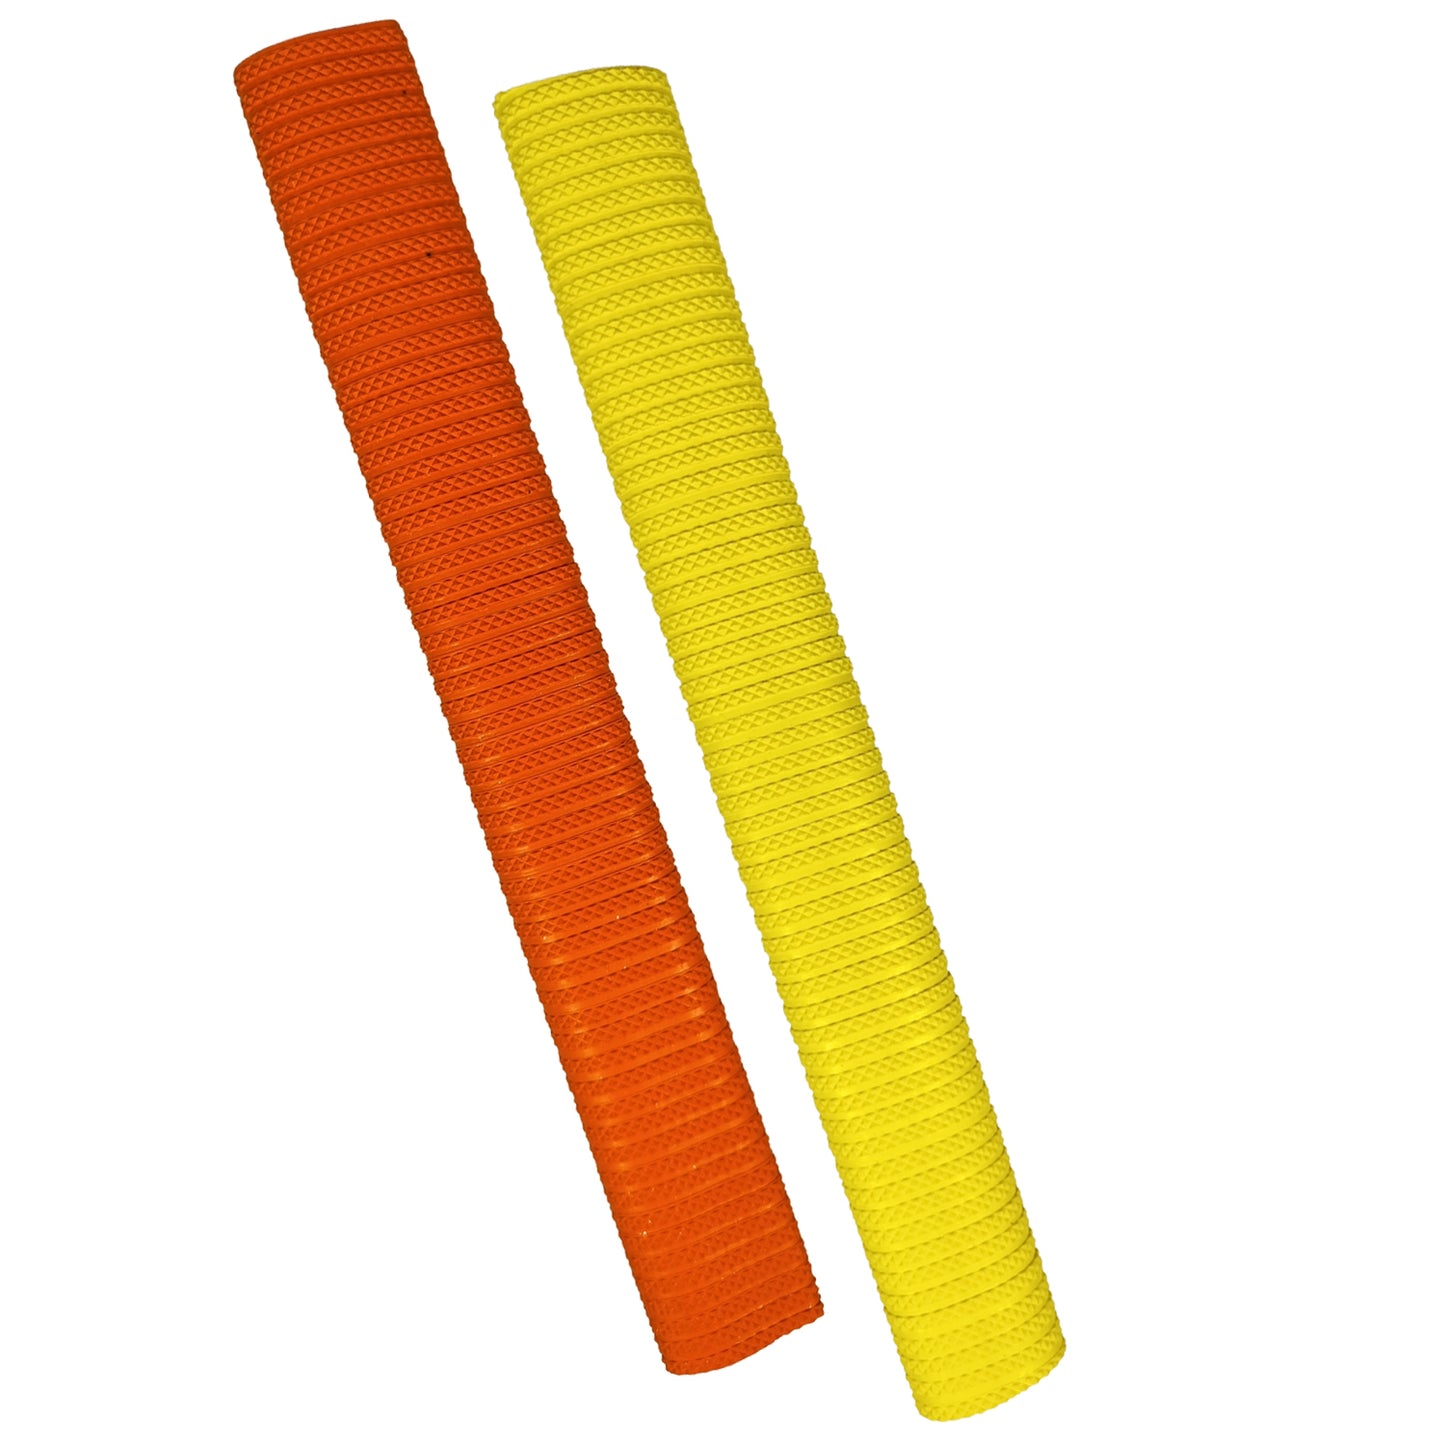 Prokick Cricket Bat Grip, Diamond (Assorted Color) - Best Price online Prokicksports.com